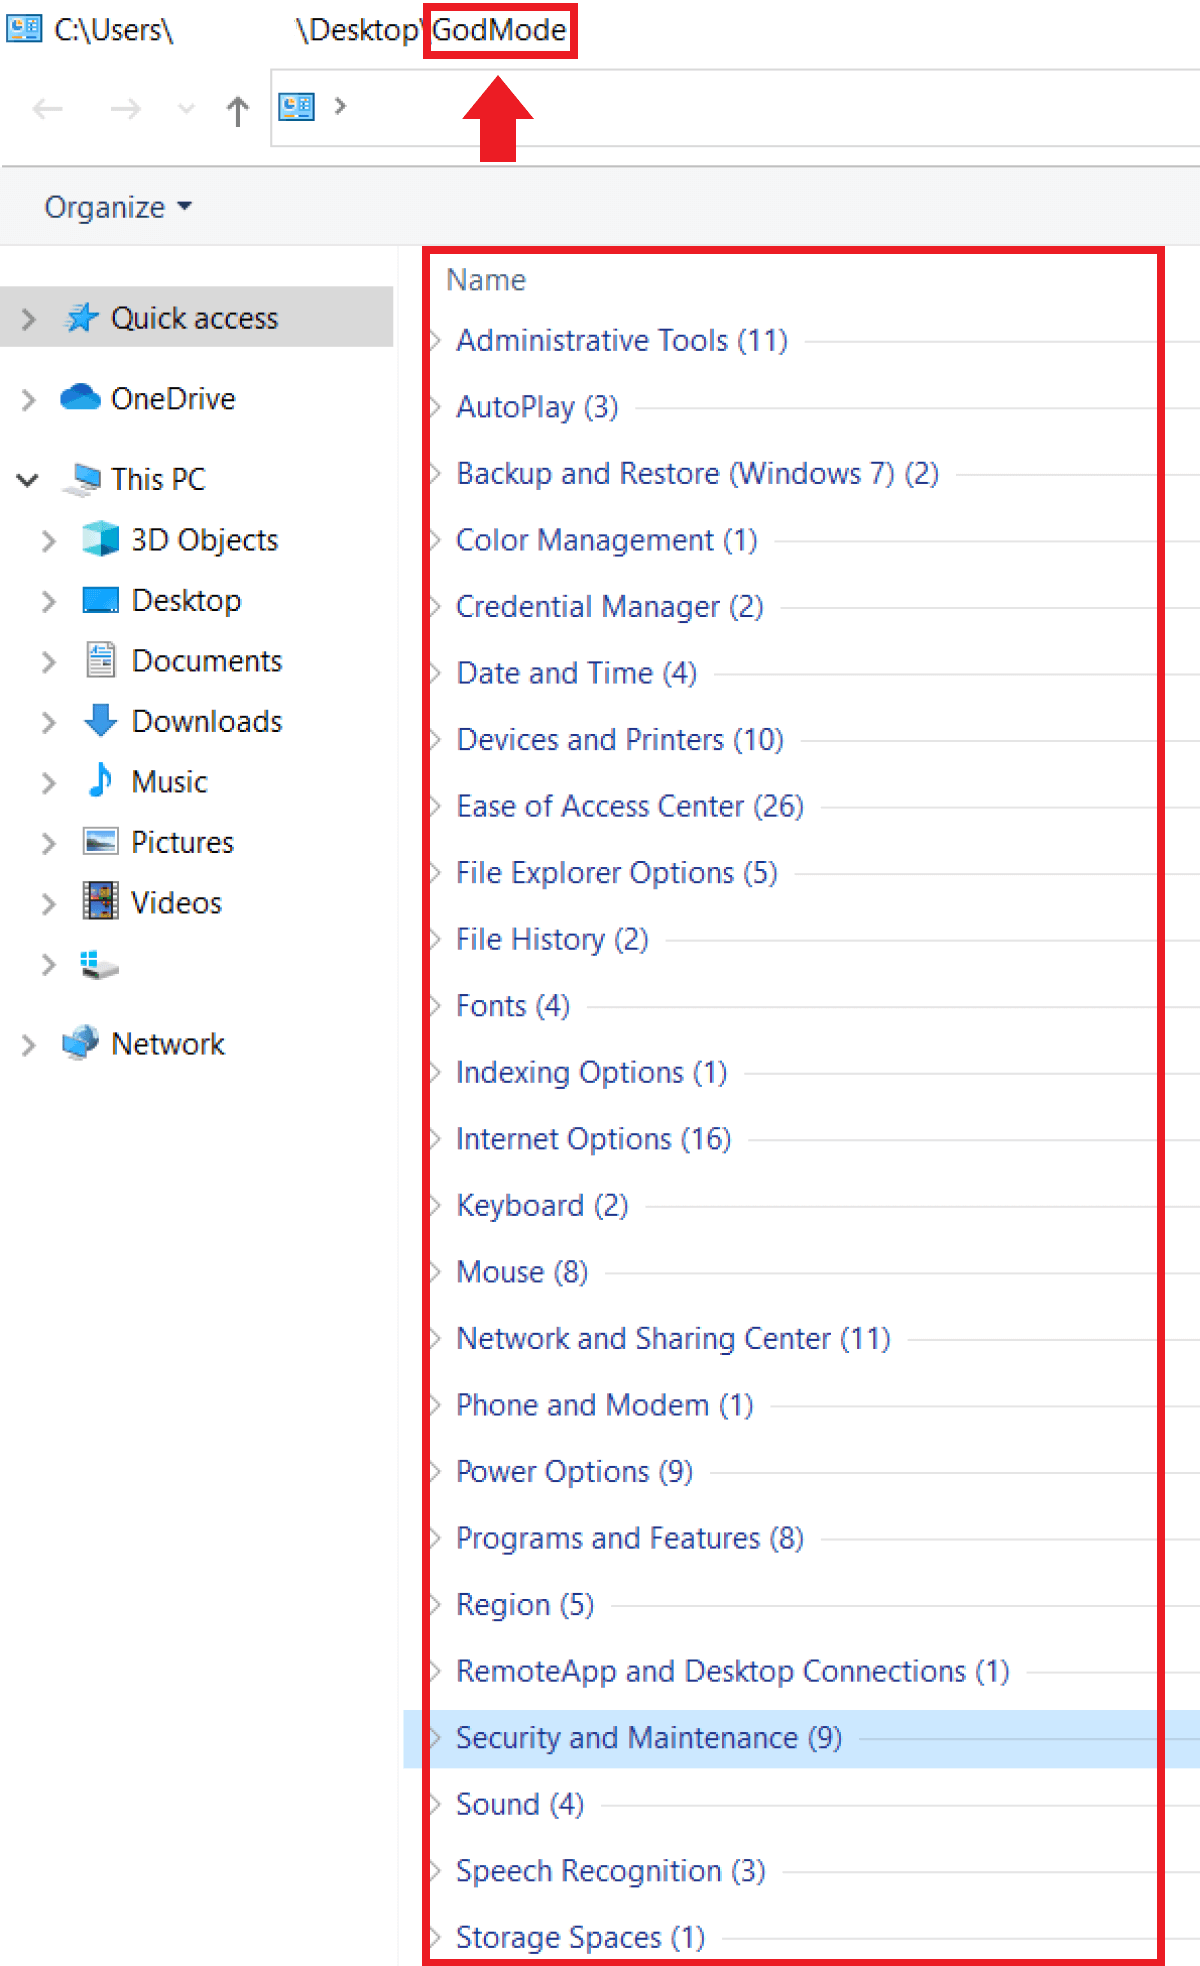 Windows 10 God Mode folder with 250 control panel settings